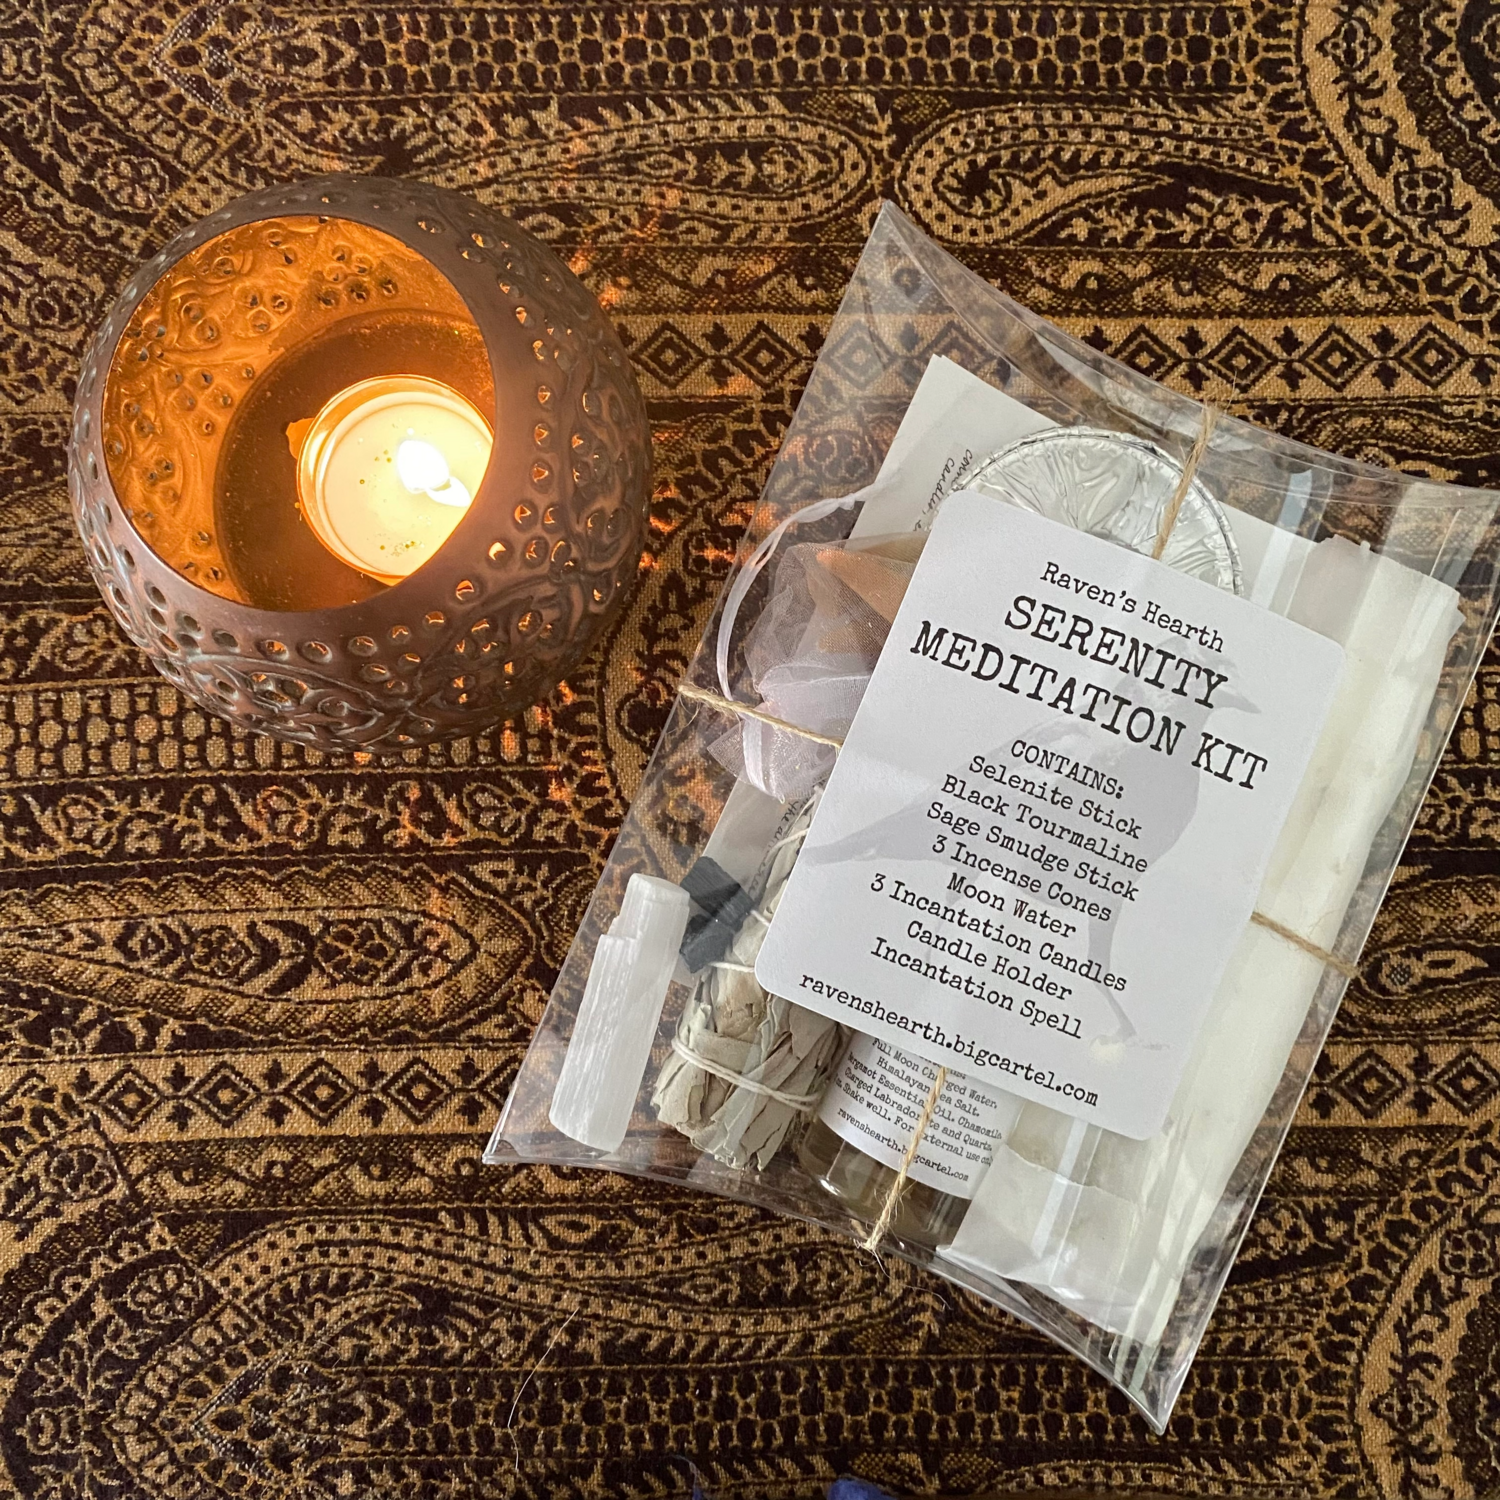 Serenity mediation ritual kit